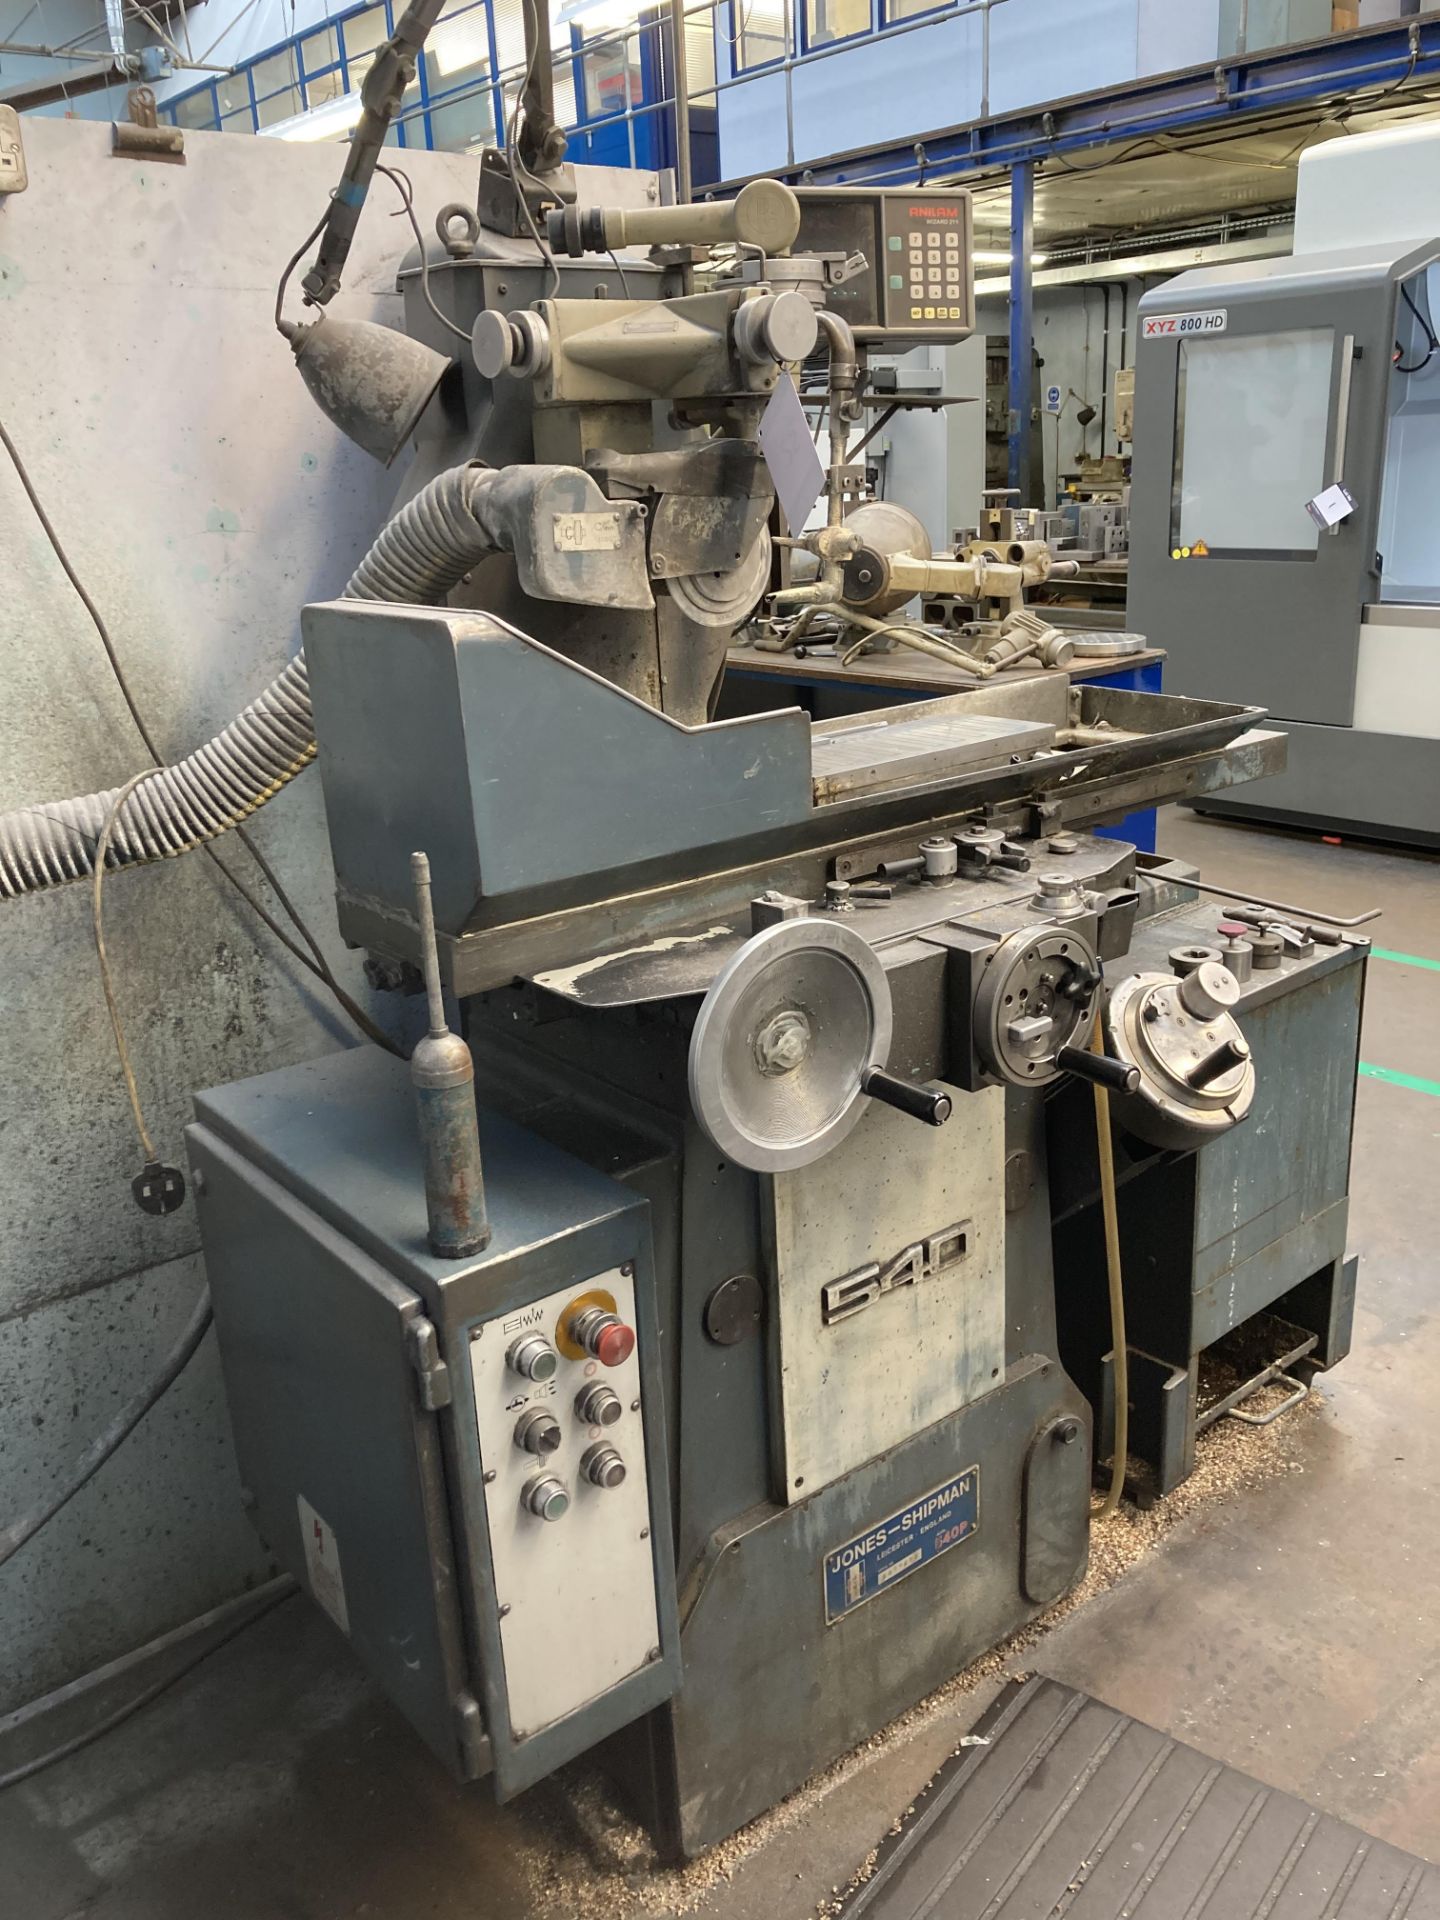 Jones & Shipman 540P horizontal surface grinding machine, Serial No. B099698, table size 26" x 6" - Image 2 of 8